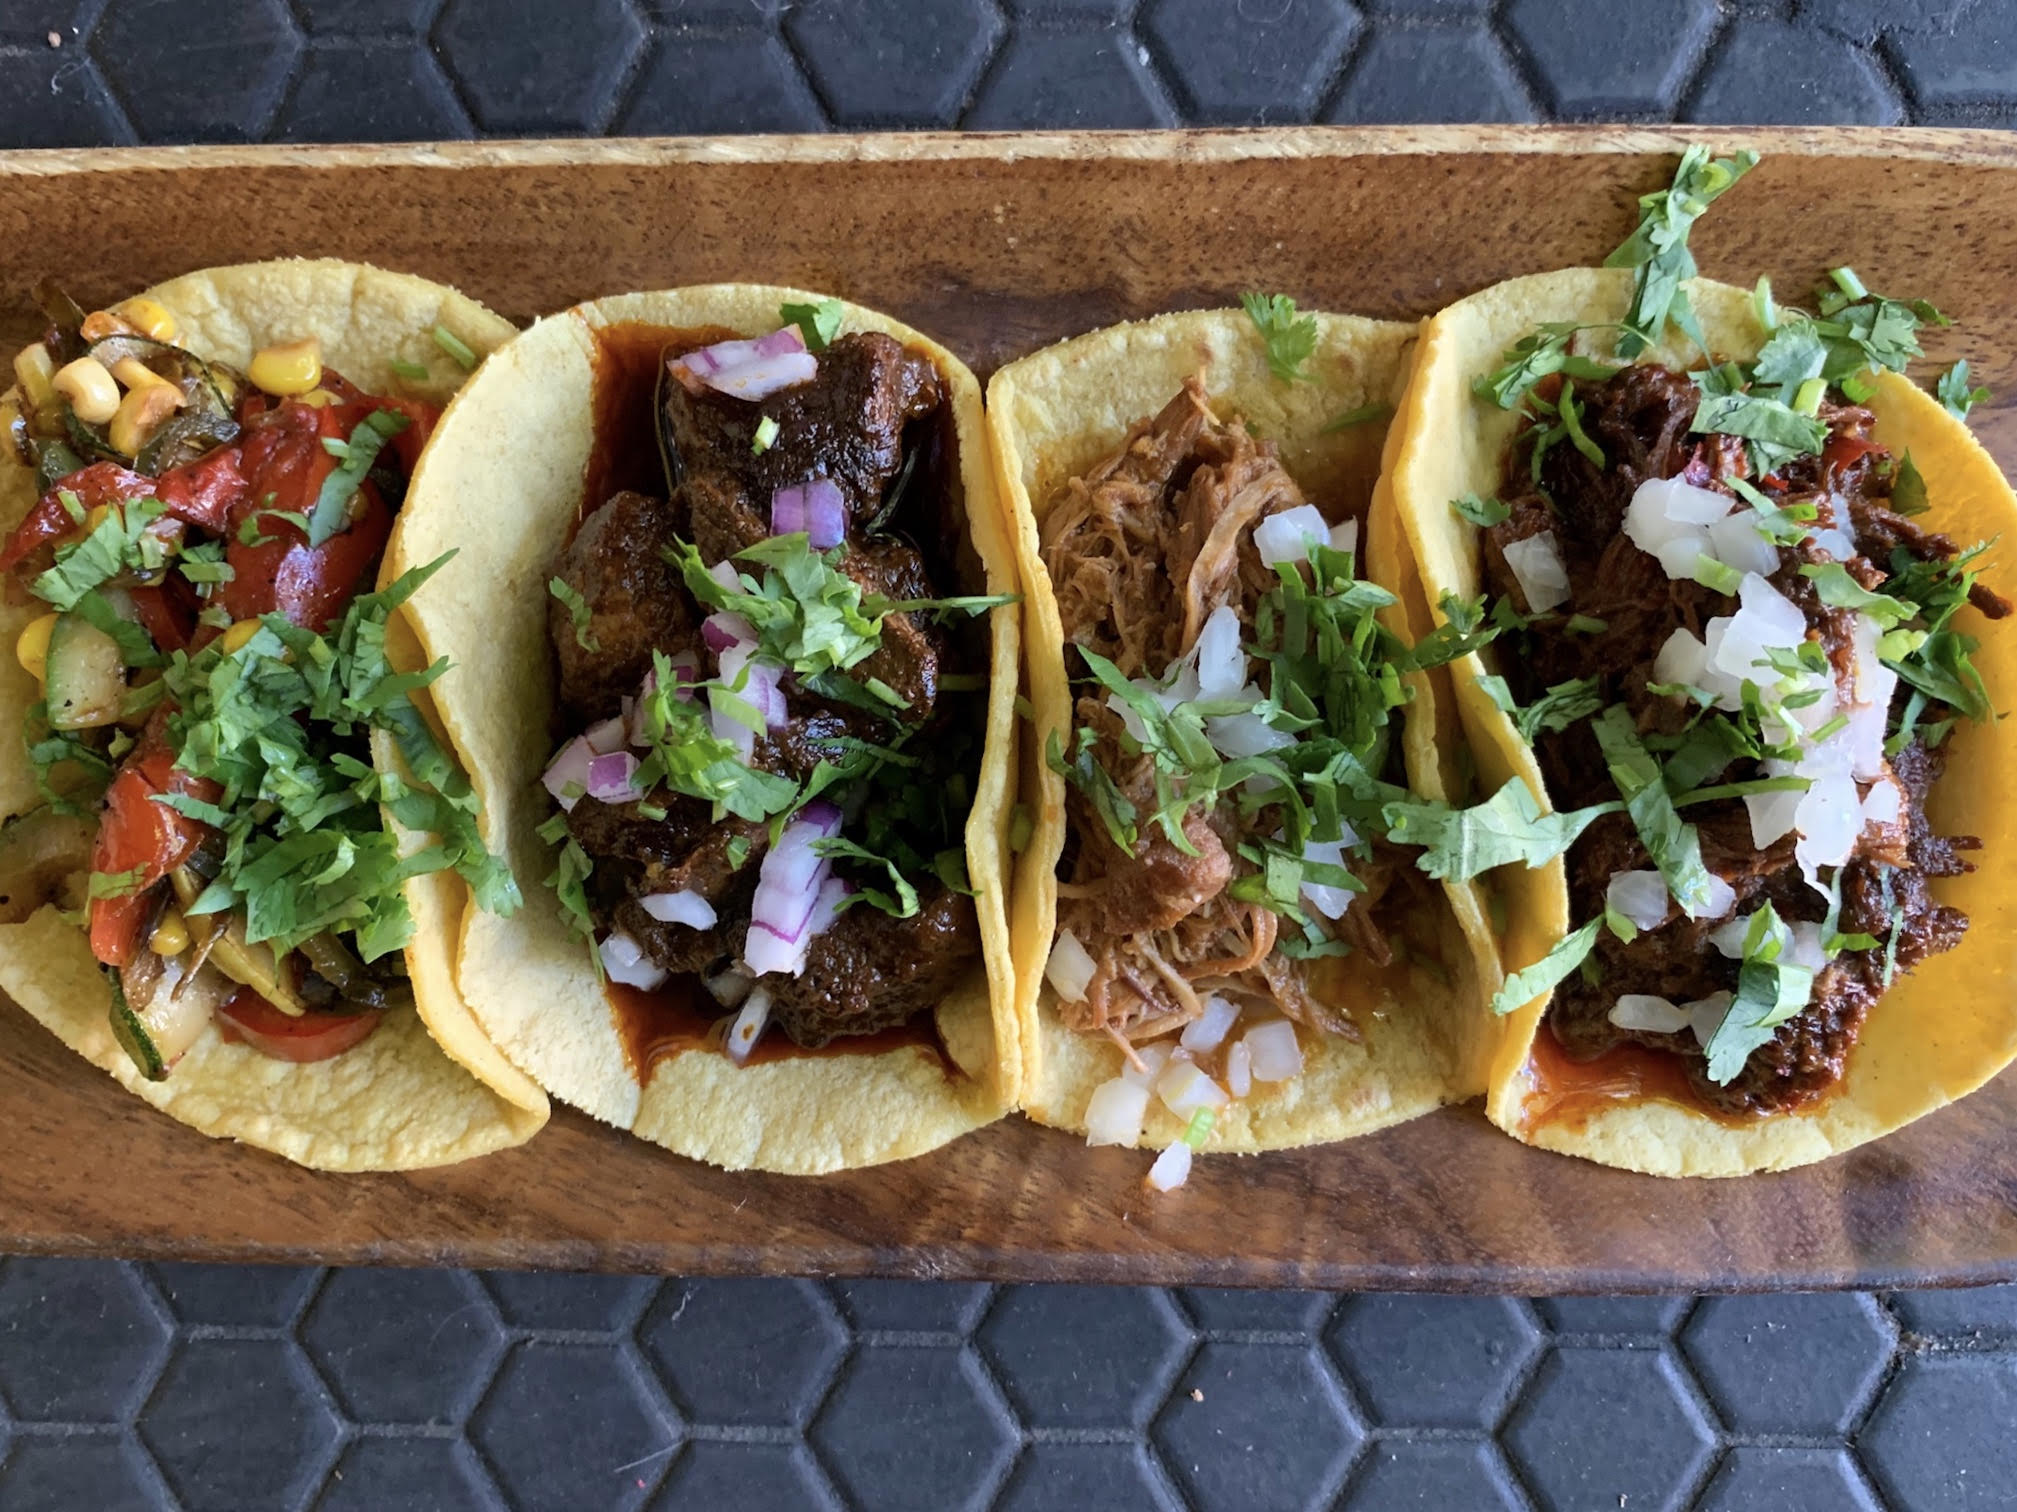 Four tacos de guisado at Tacoliciious